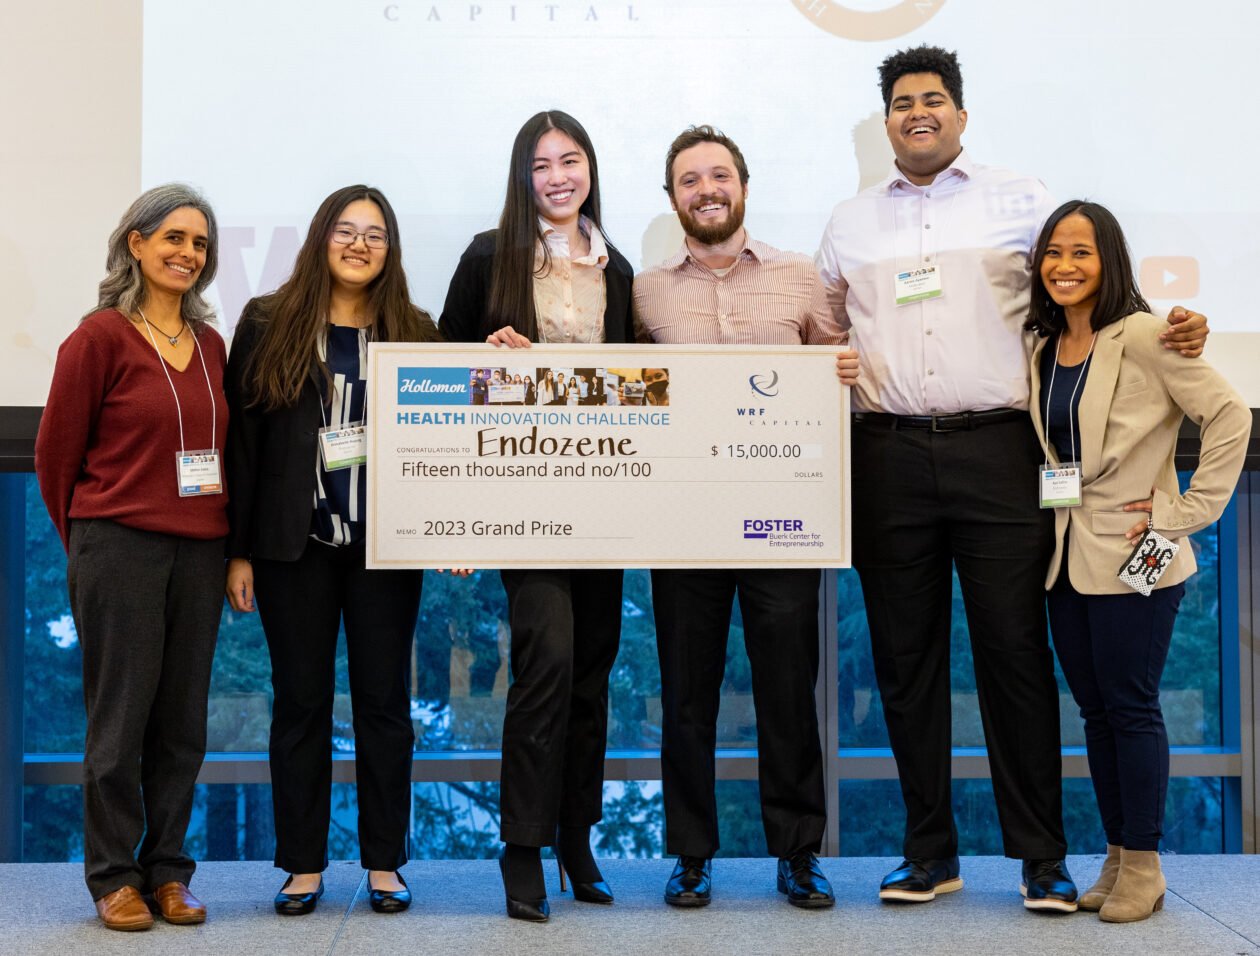 Endometriosis test wins top prize at Univ. of Washington health innovation competition